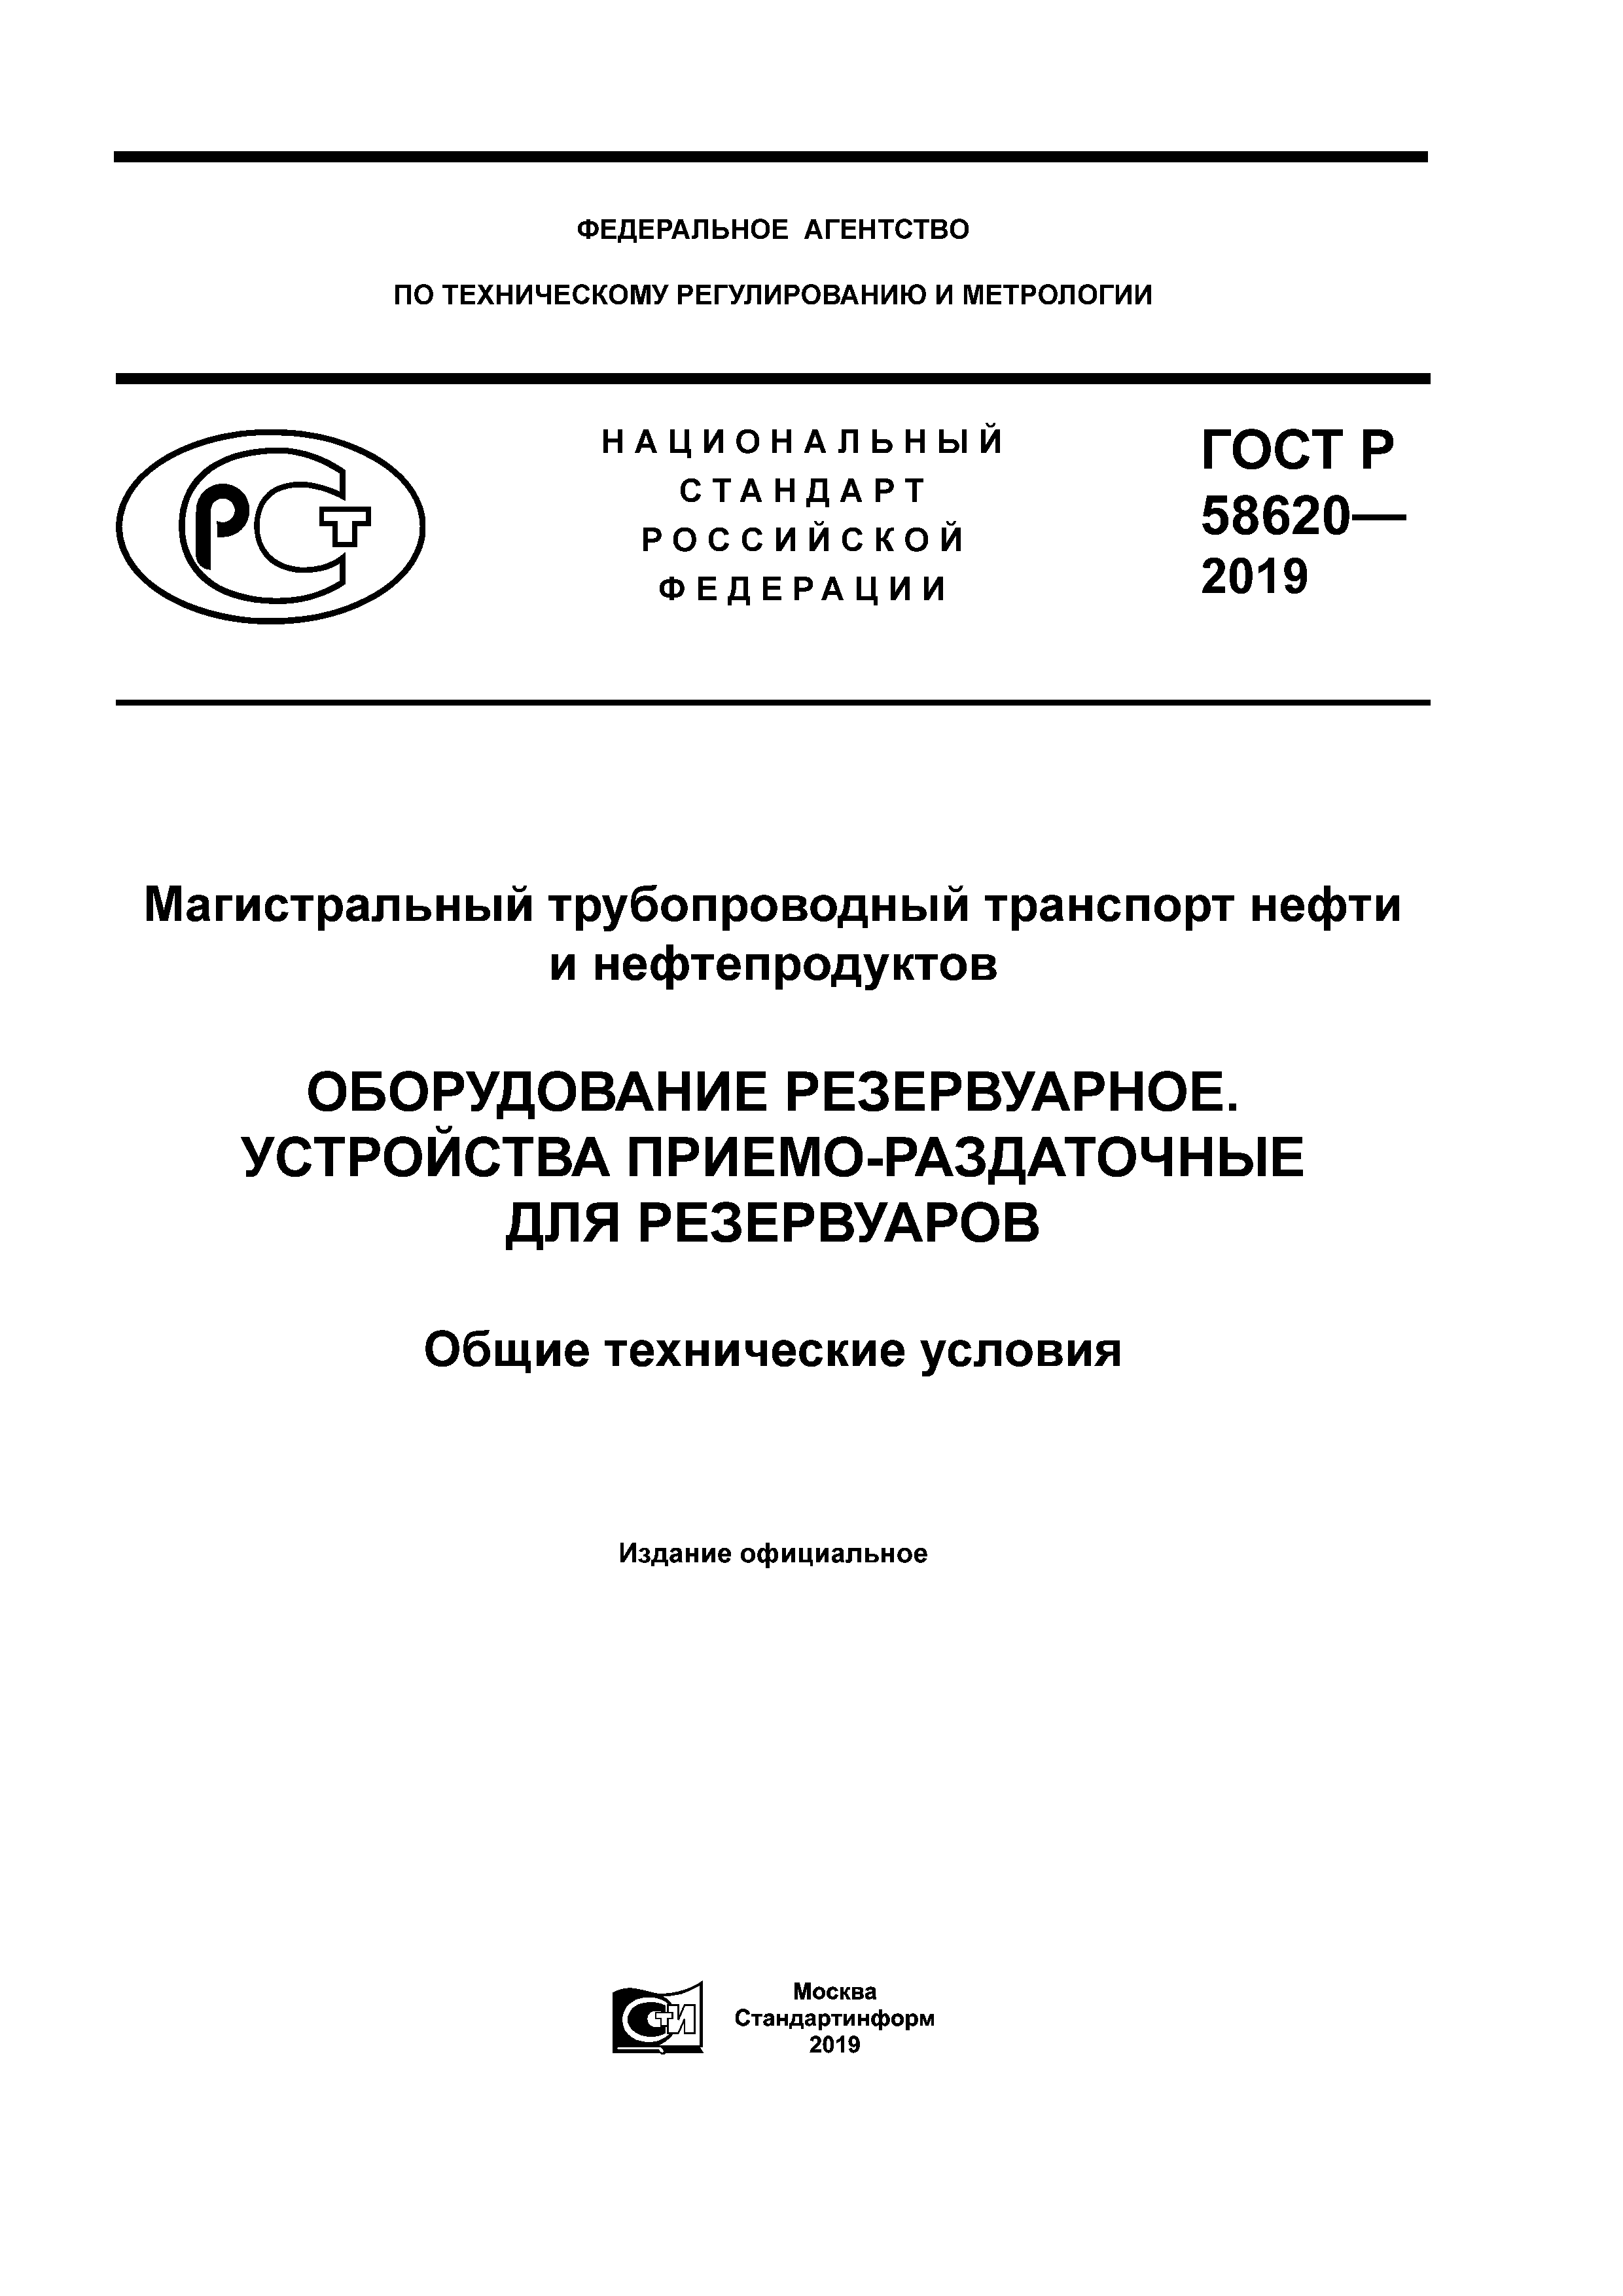 ГОСТ Р 58620-2019